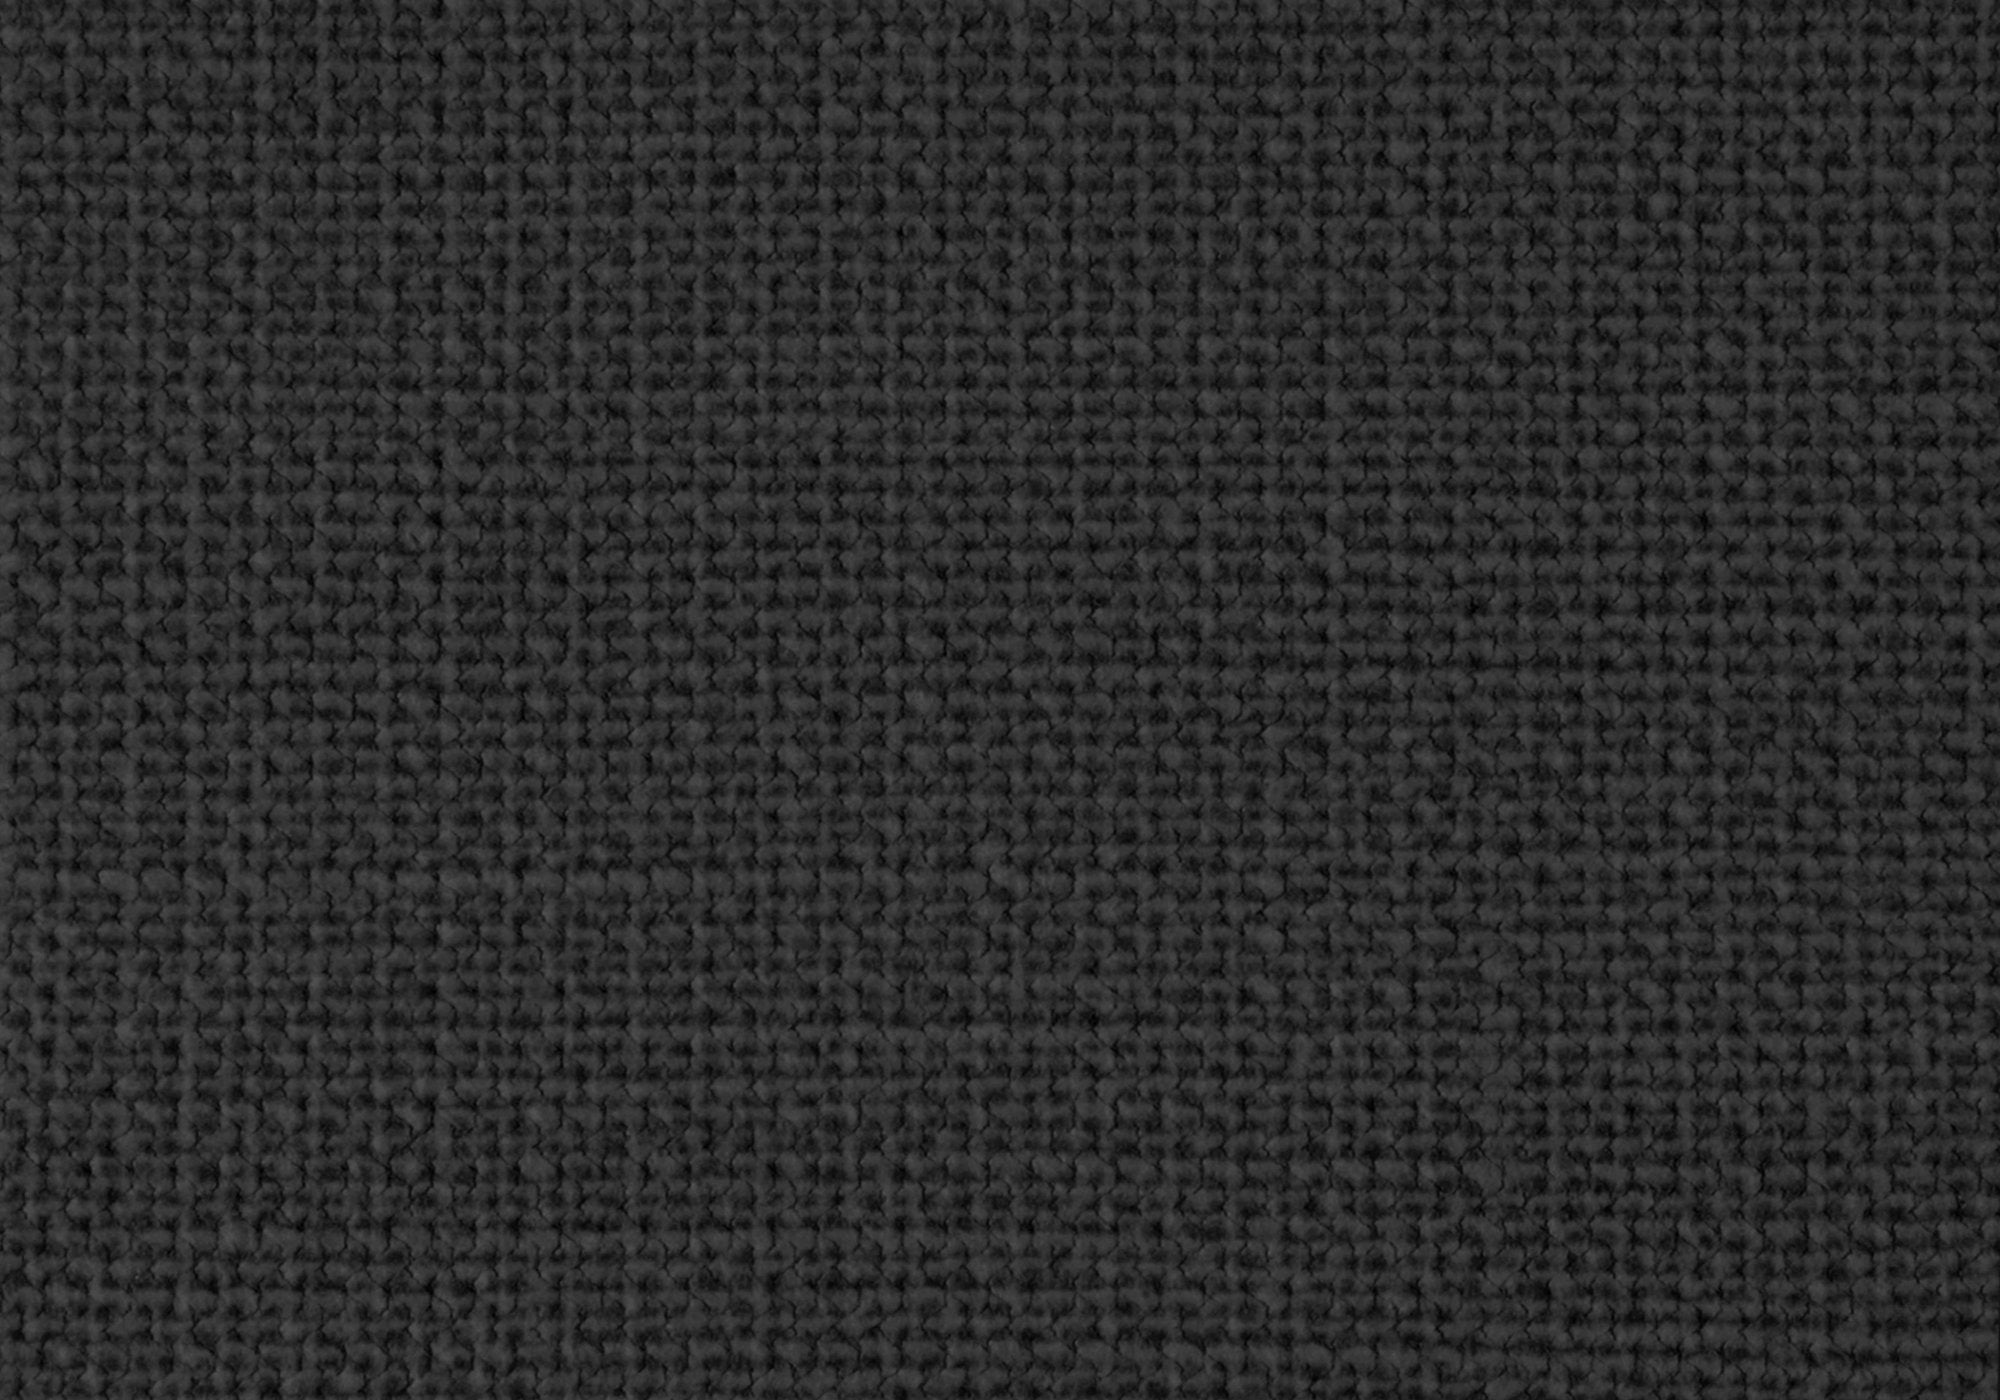 Accent Chair - Dark Grey Fabric